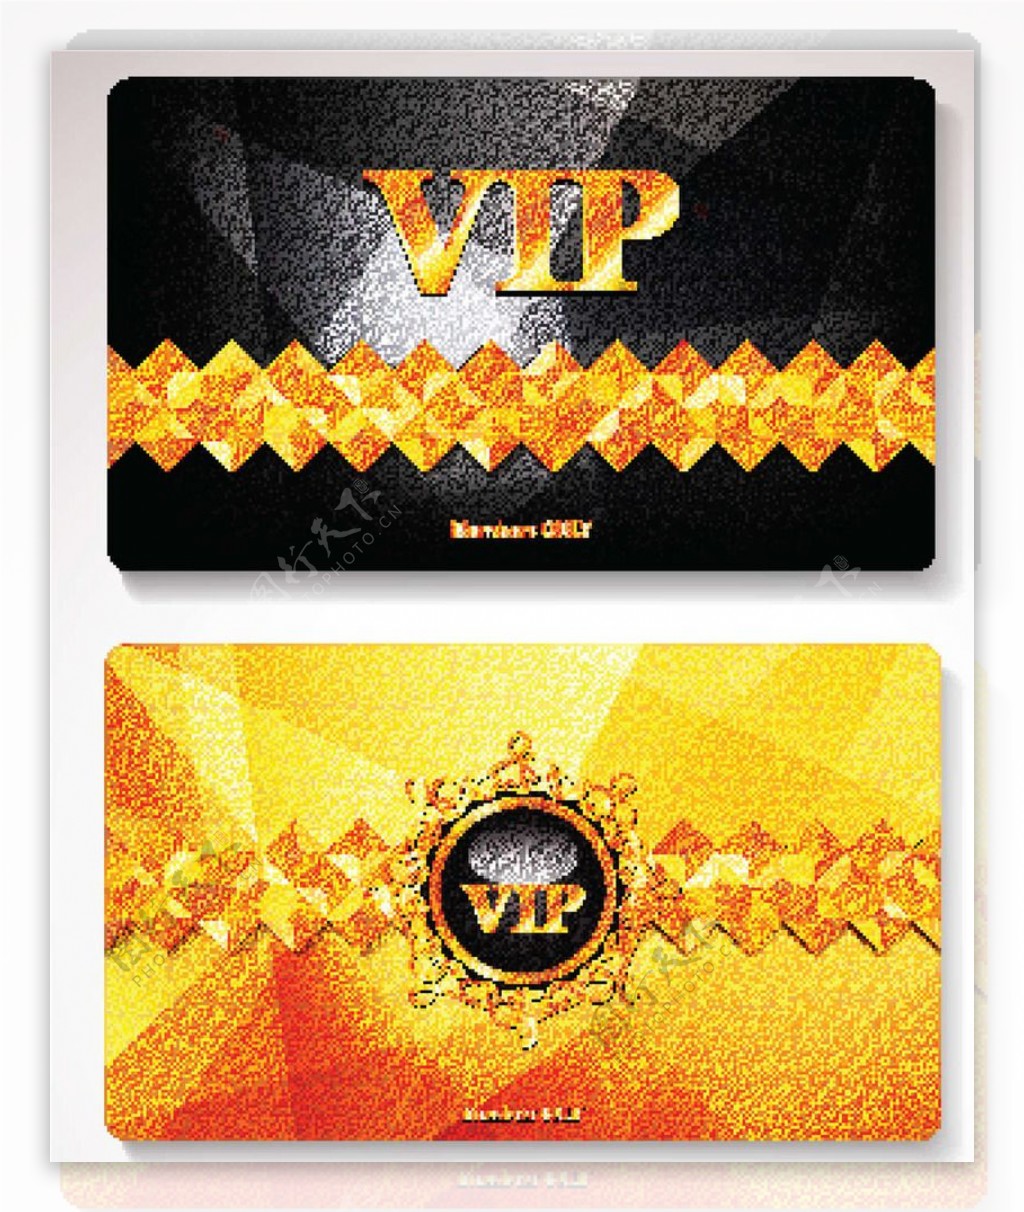 VIP卡会员卡图片